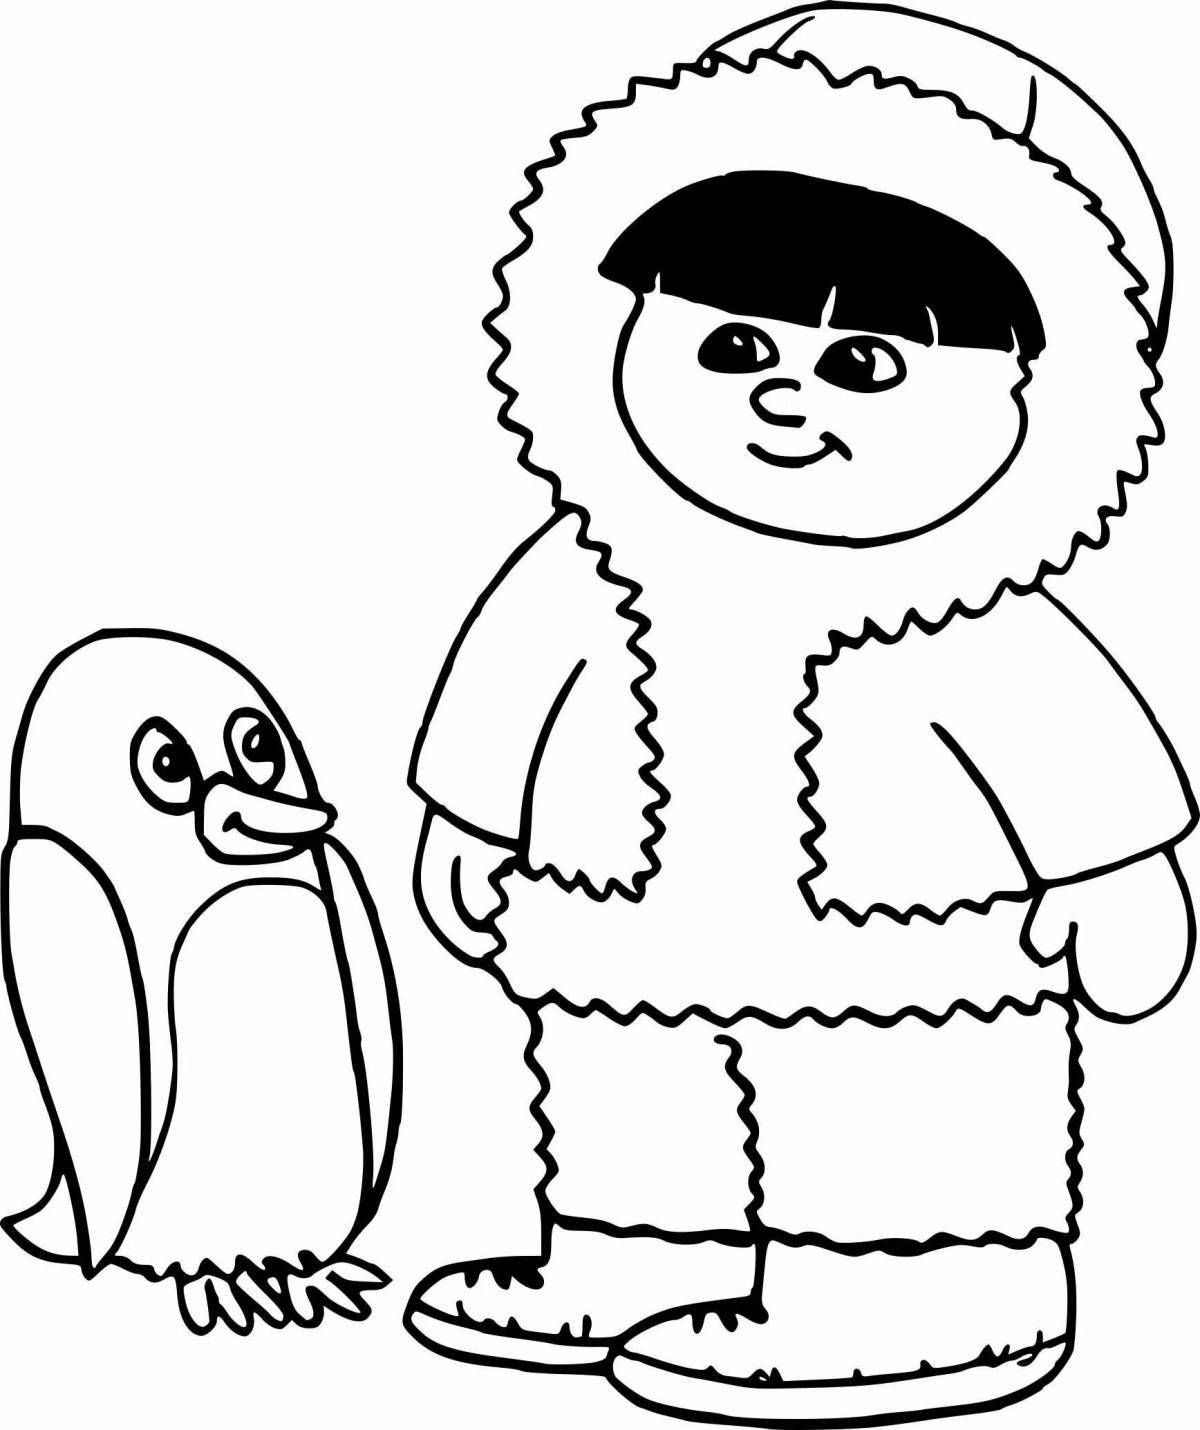 Magic eskimo children's coloring pages